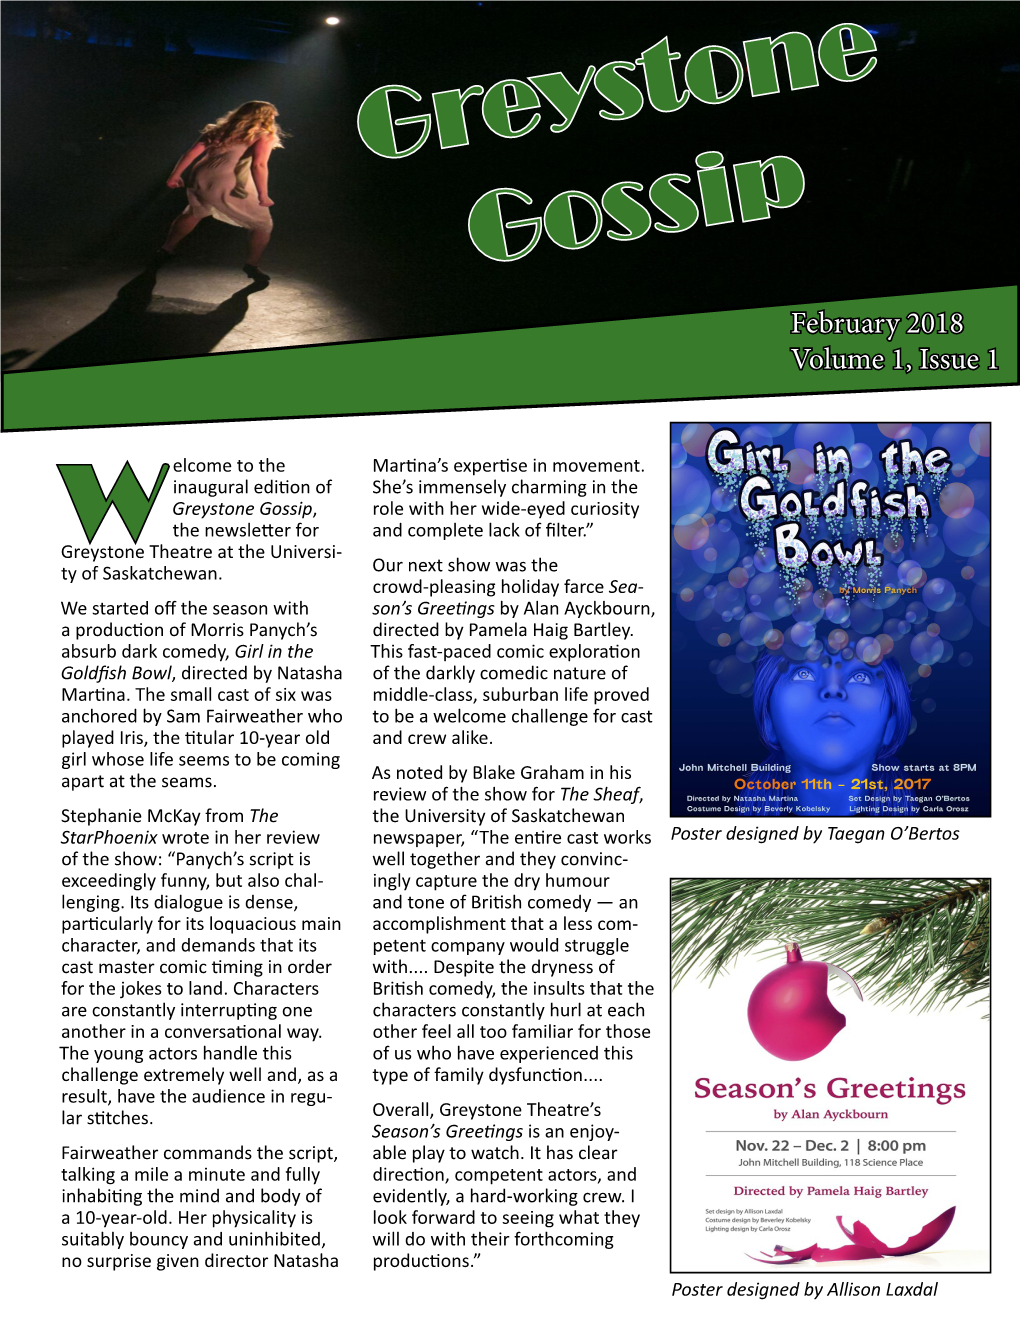 Greystone Gossip February 2018 Volume 1, Issue 1